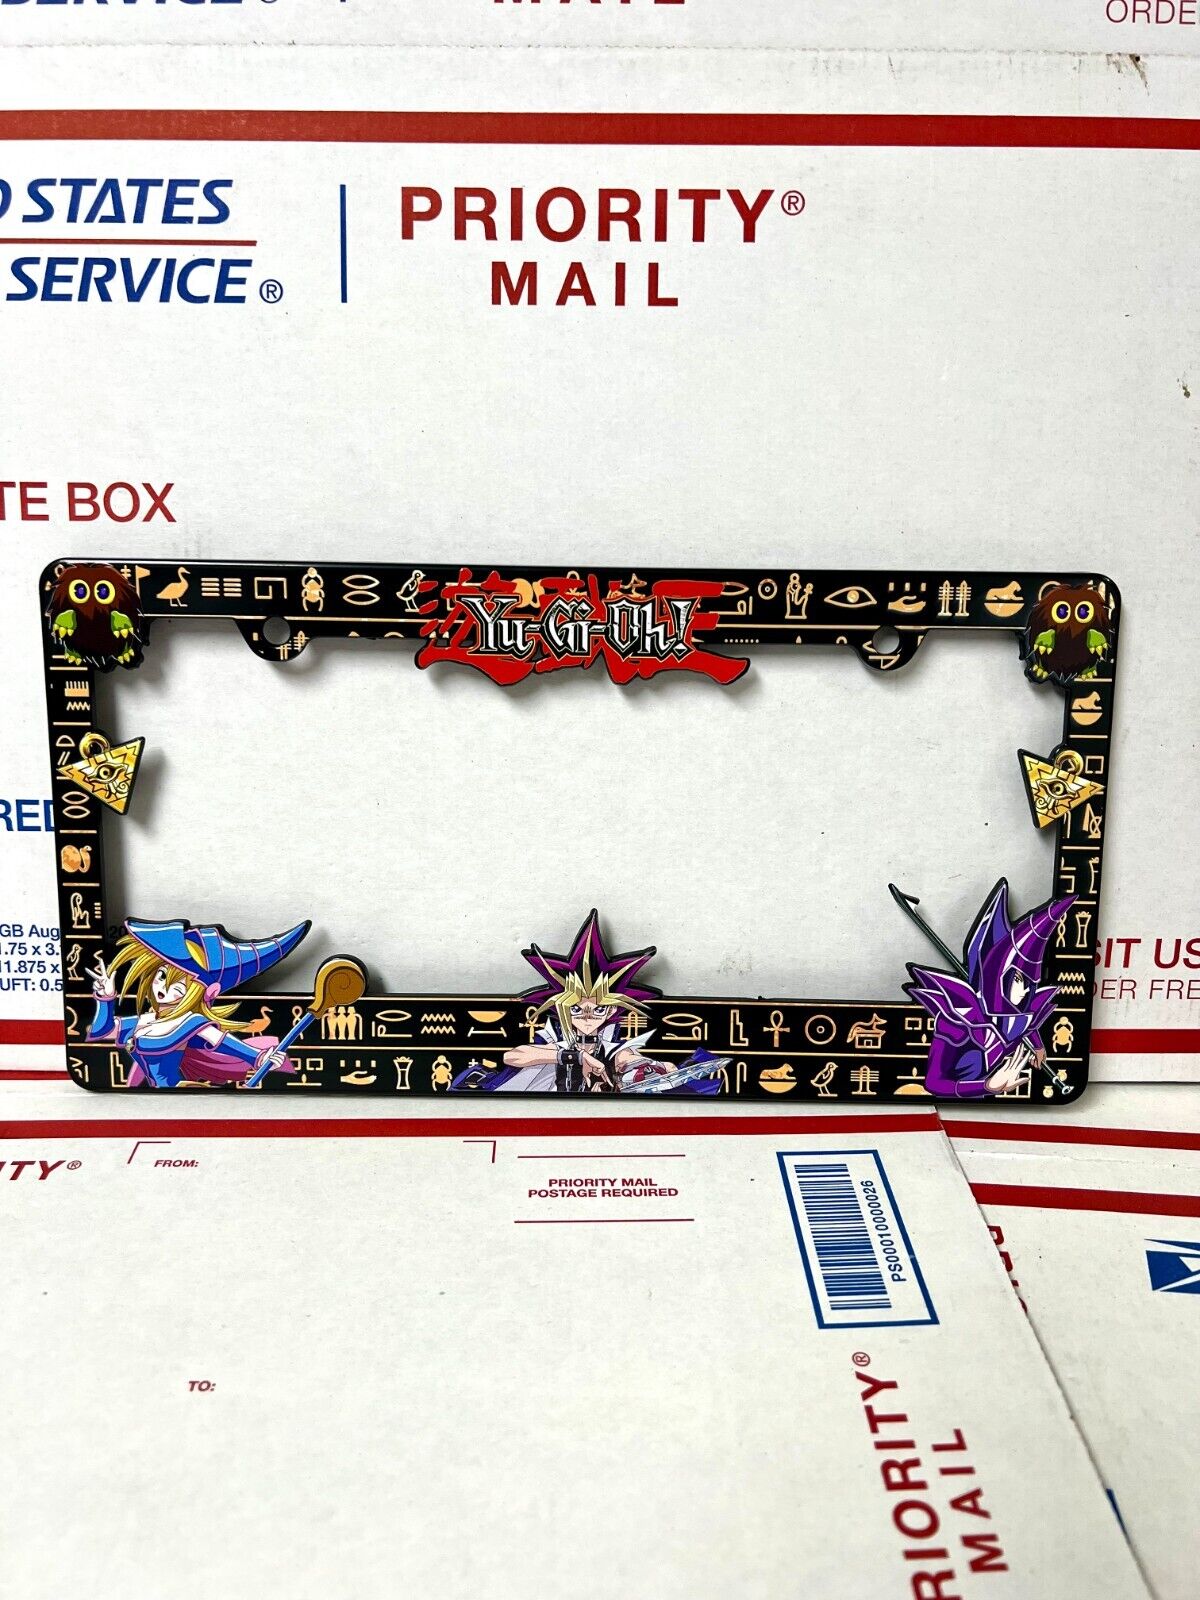 Yugioh License Plate Frame featuring Yugi, Dark Magician Girl, and Dark Magician